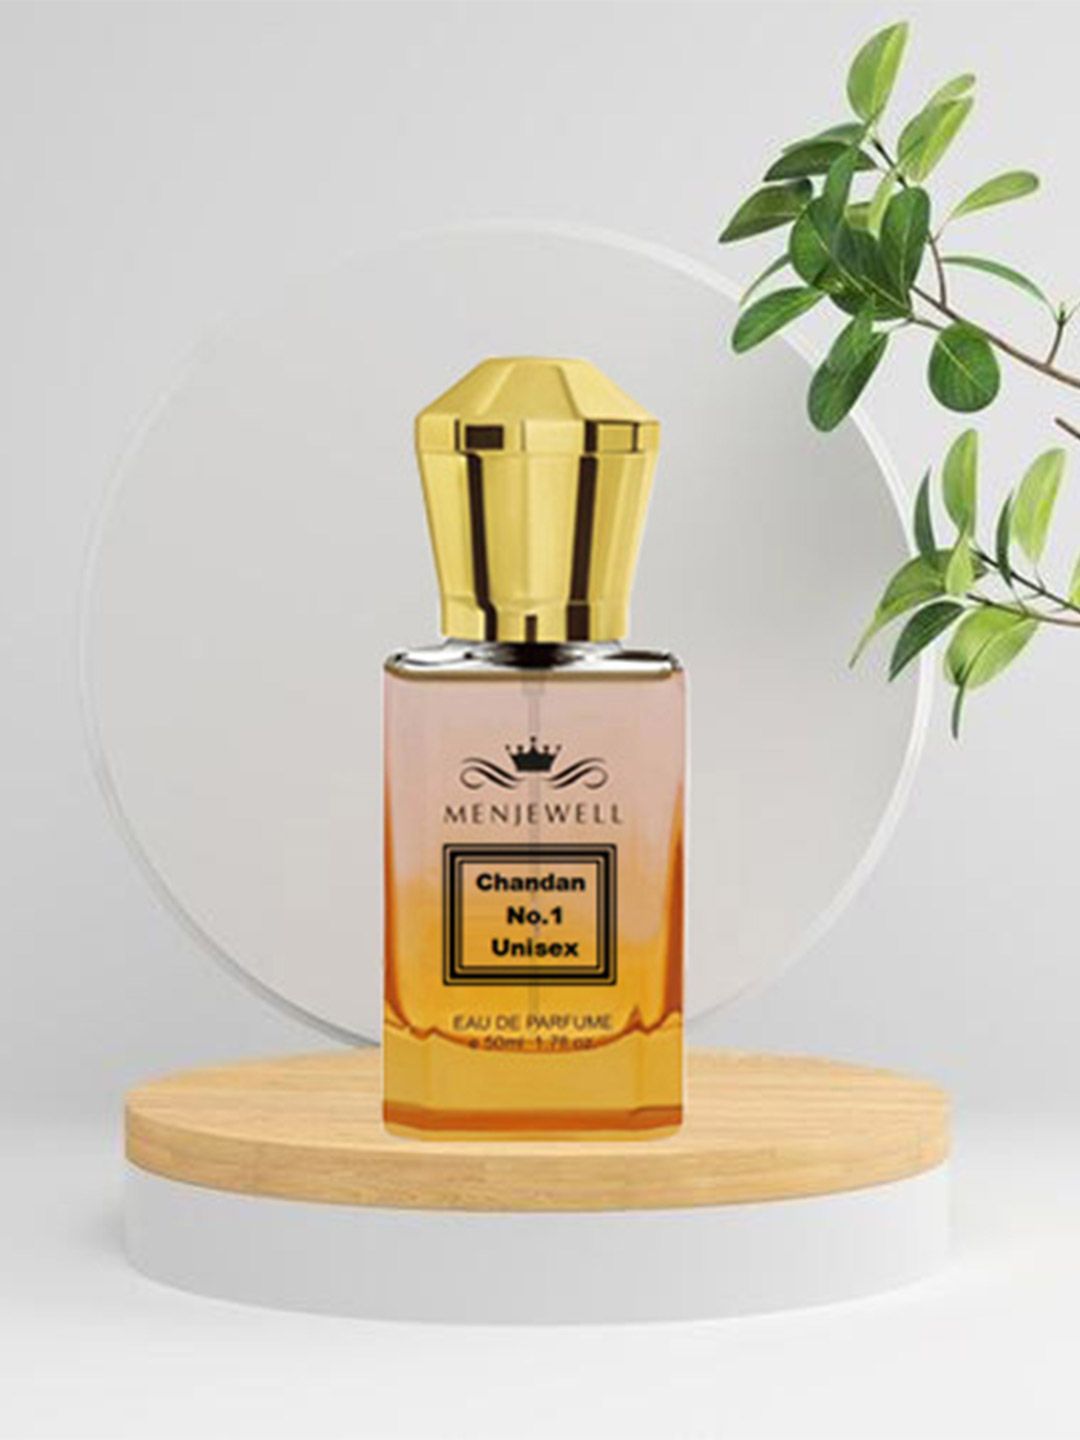 Menjewell Chandan No.1 Eau De Parfume - 50 ml Price in India